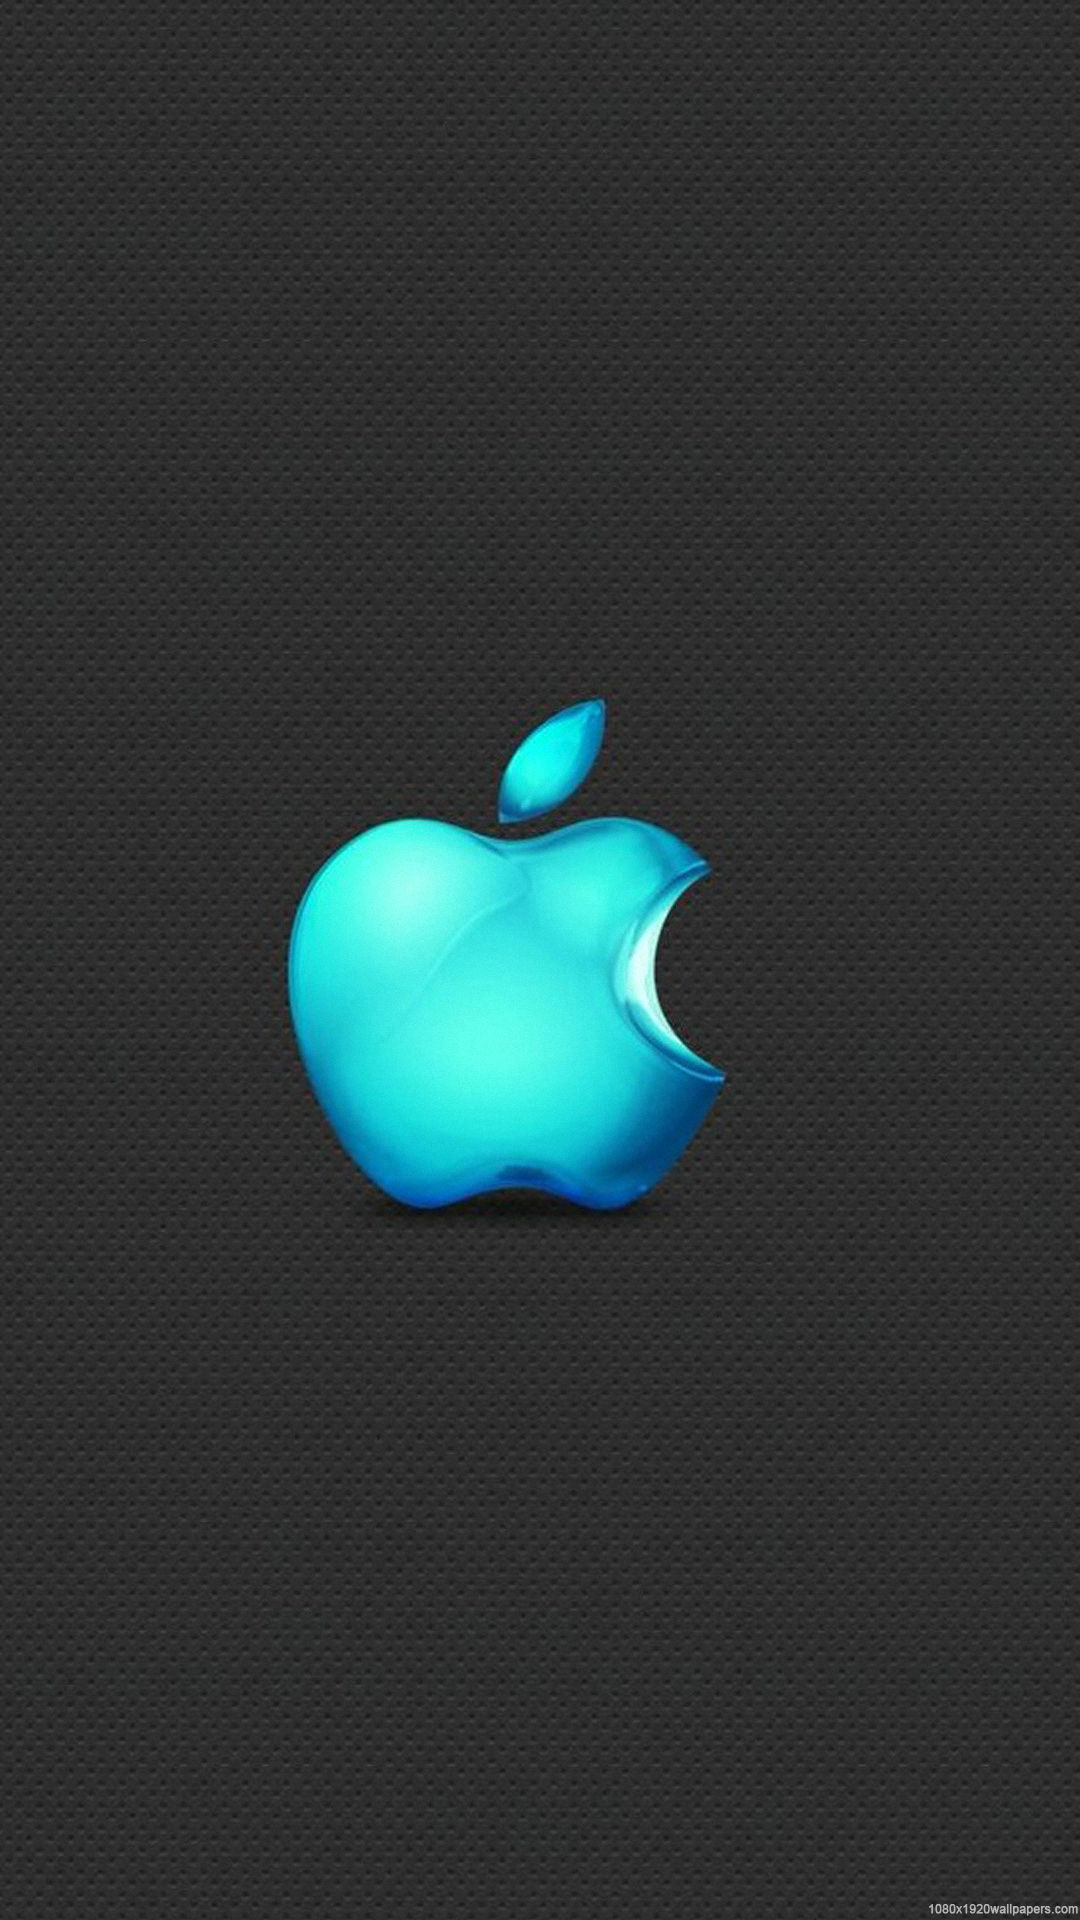 Apple Logo Wallpapers Hd - Green Apple - 1080x1920 Wallpaper 